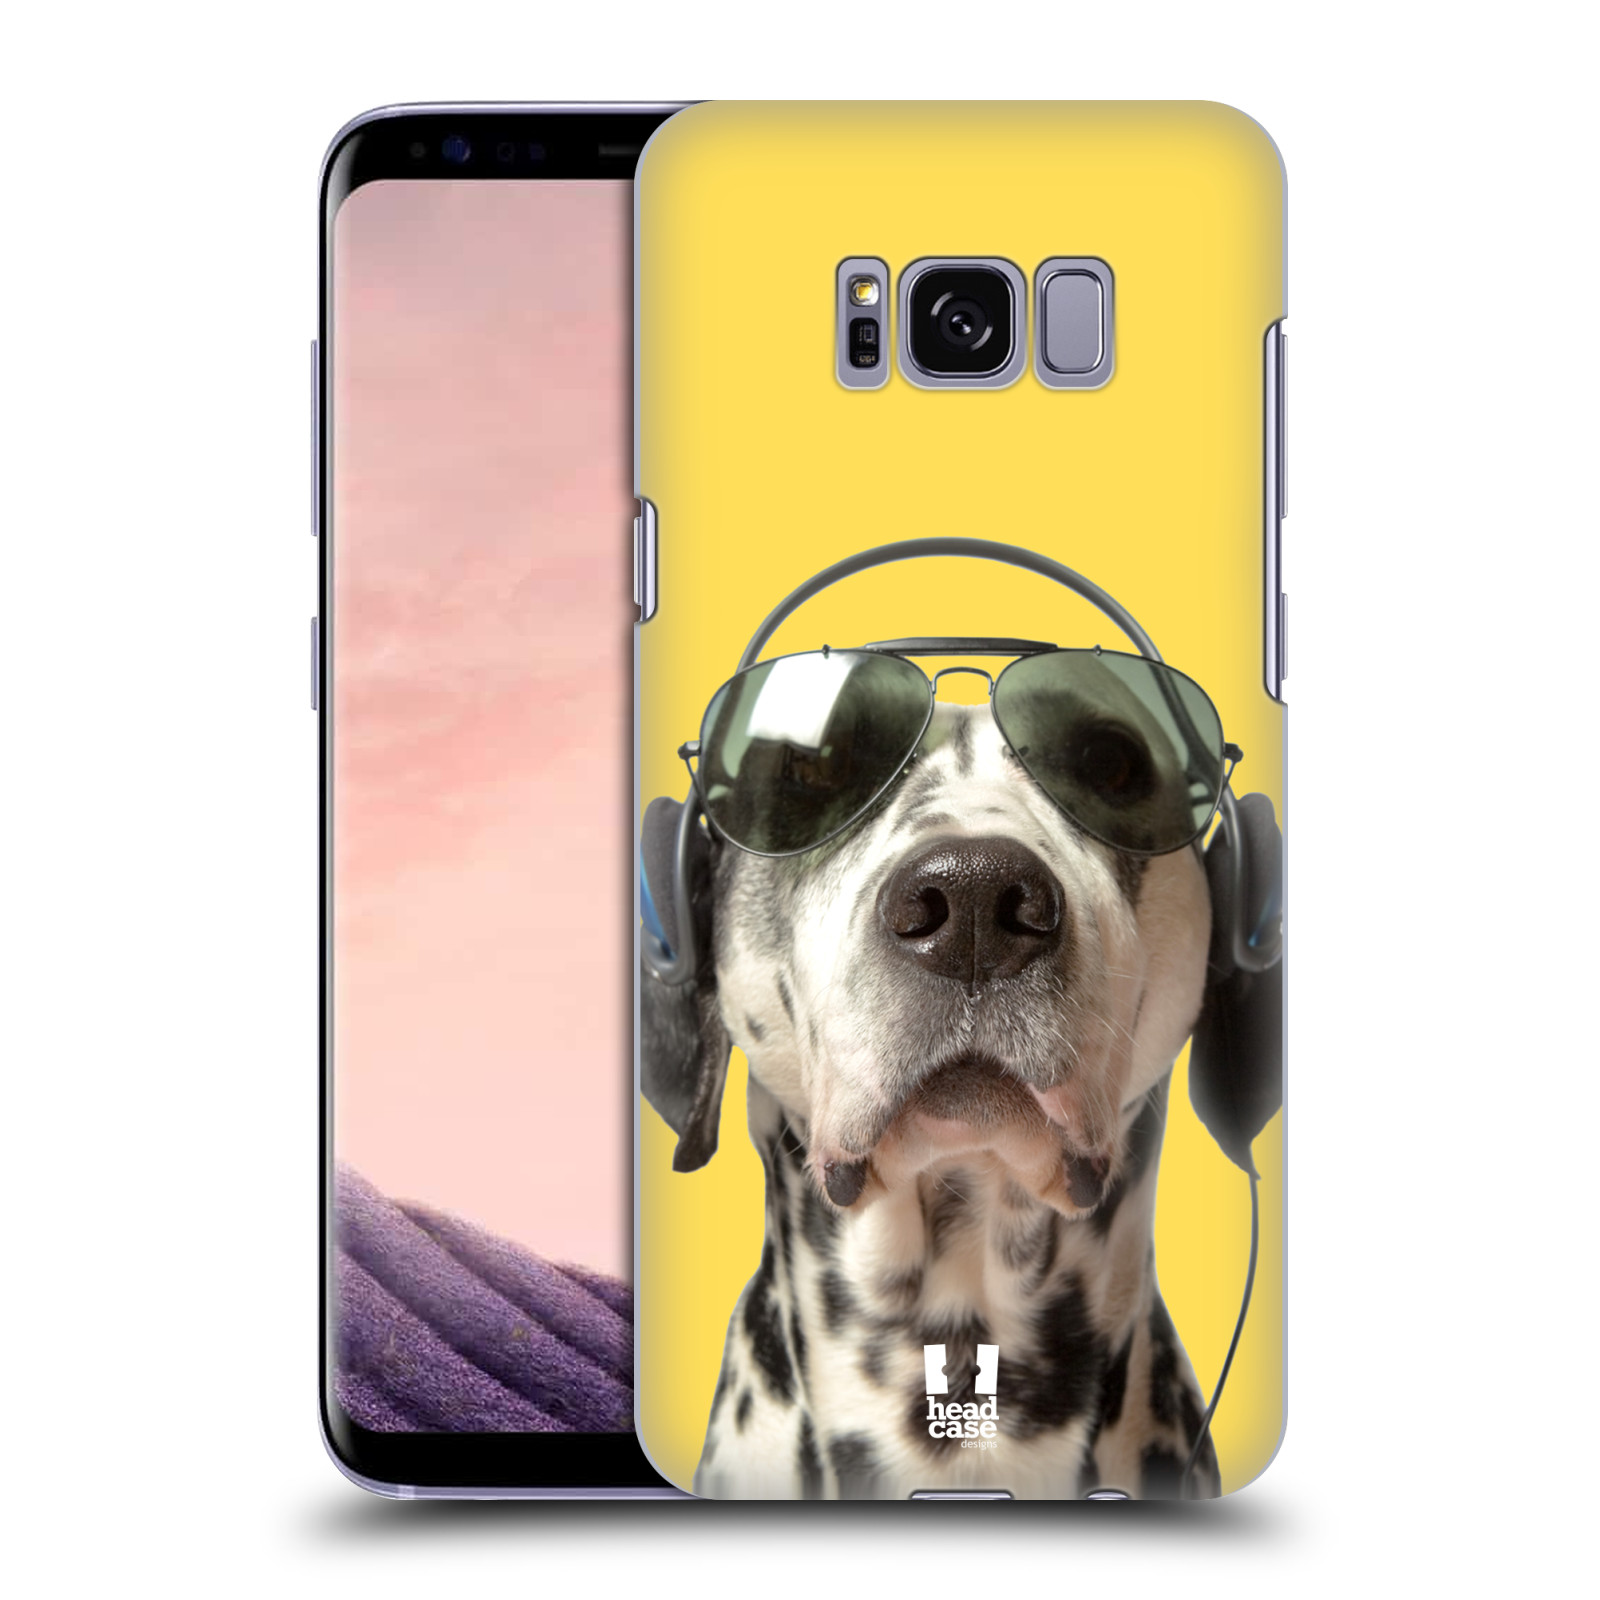 HEAD CASE plastový obal na mobil Samsung Galaxy S8 vzor Legrační zvířátka dalmatin se sluchátky žlutá